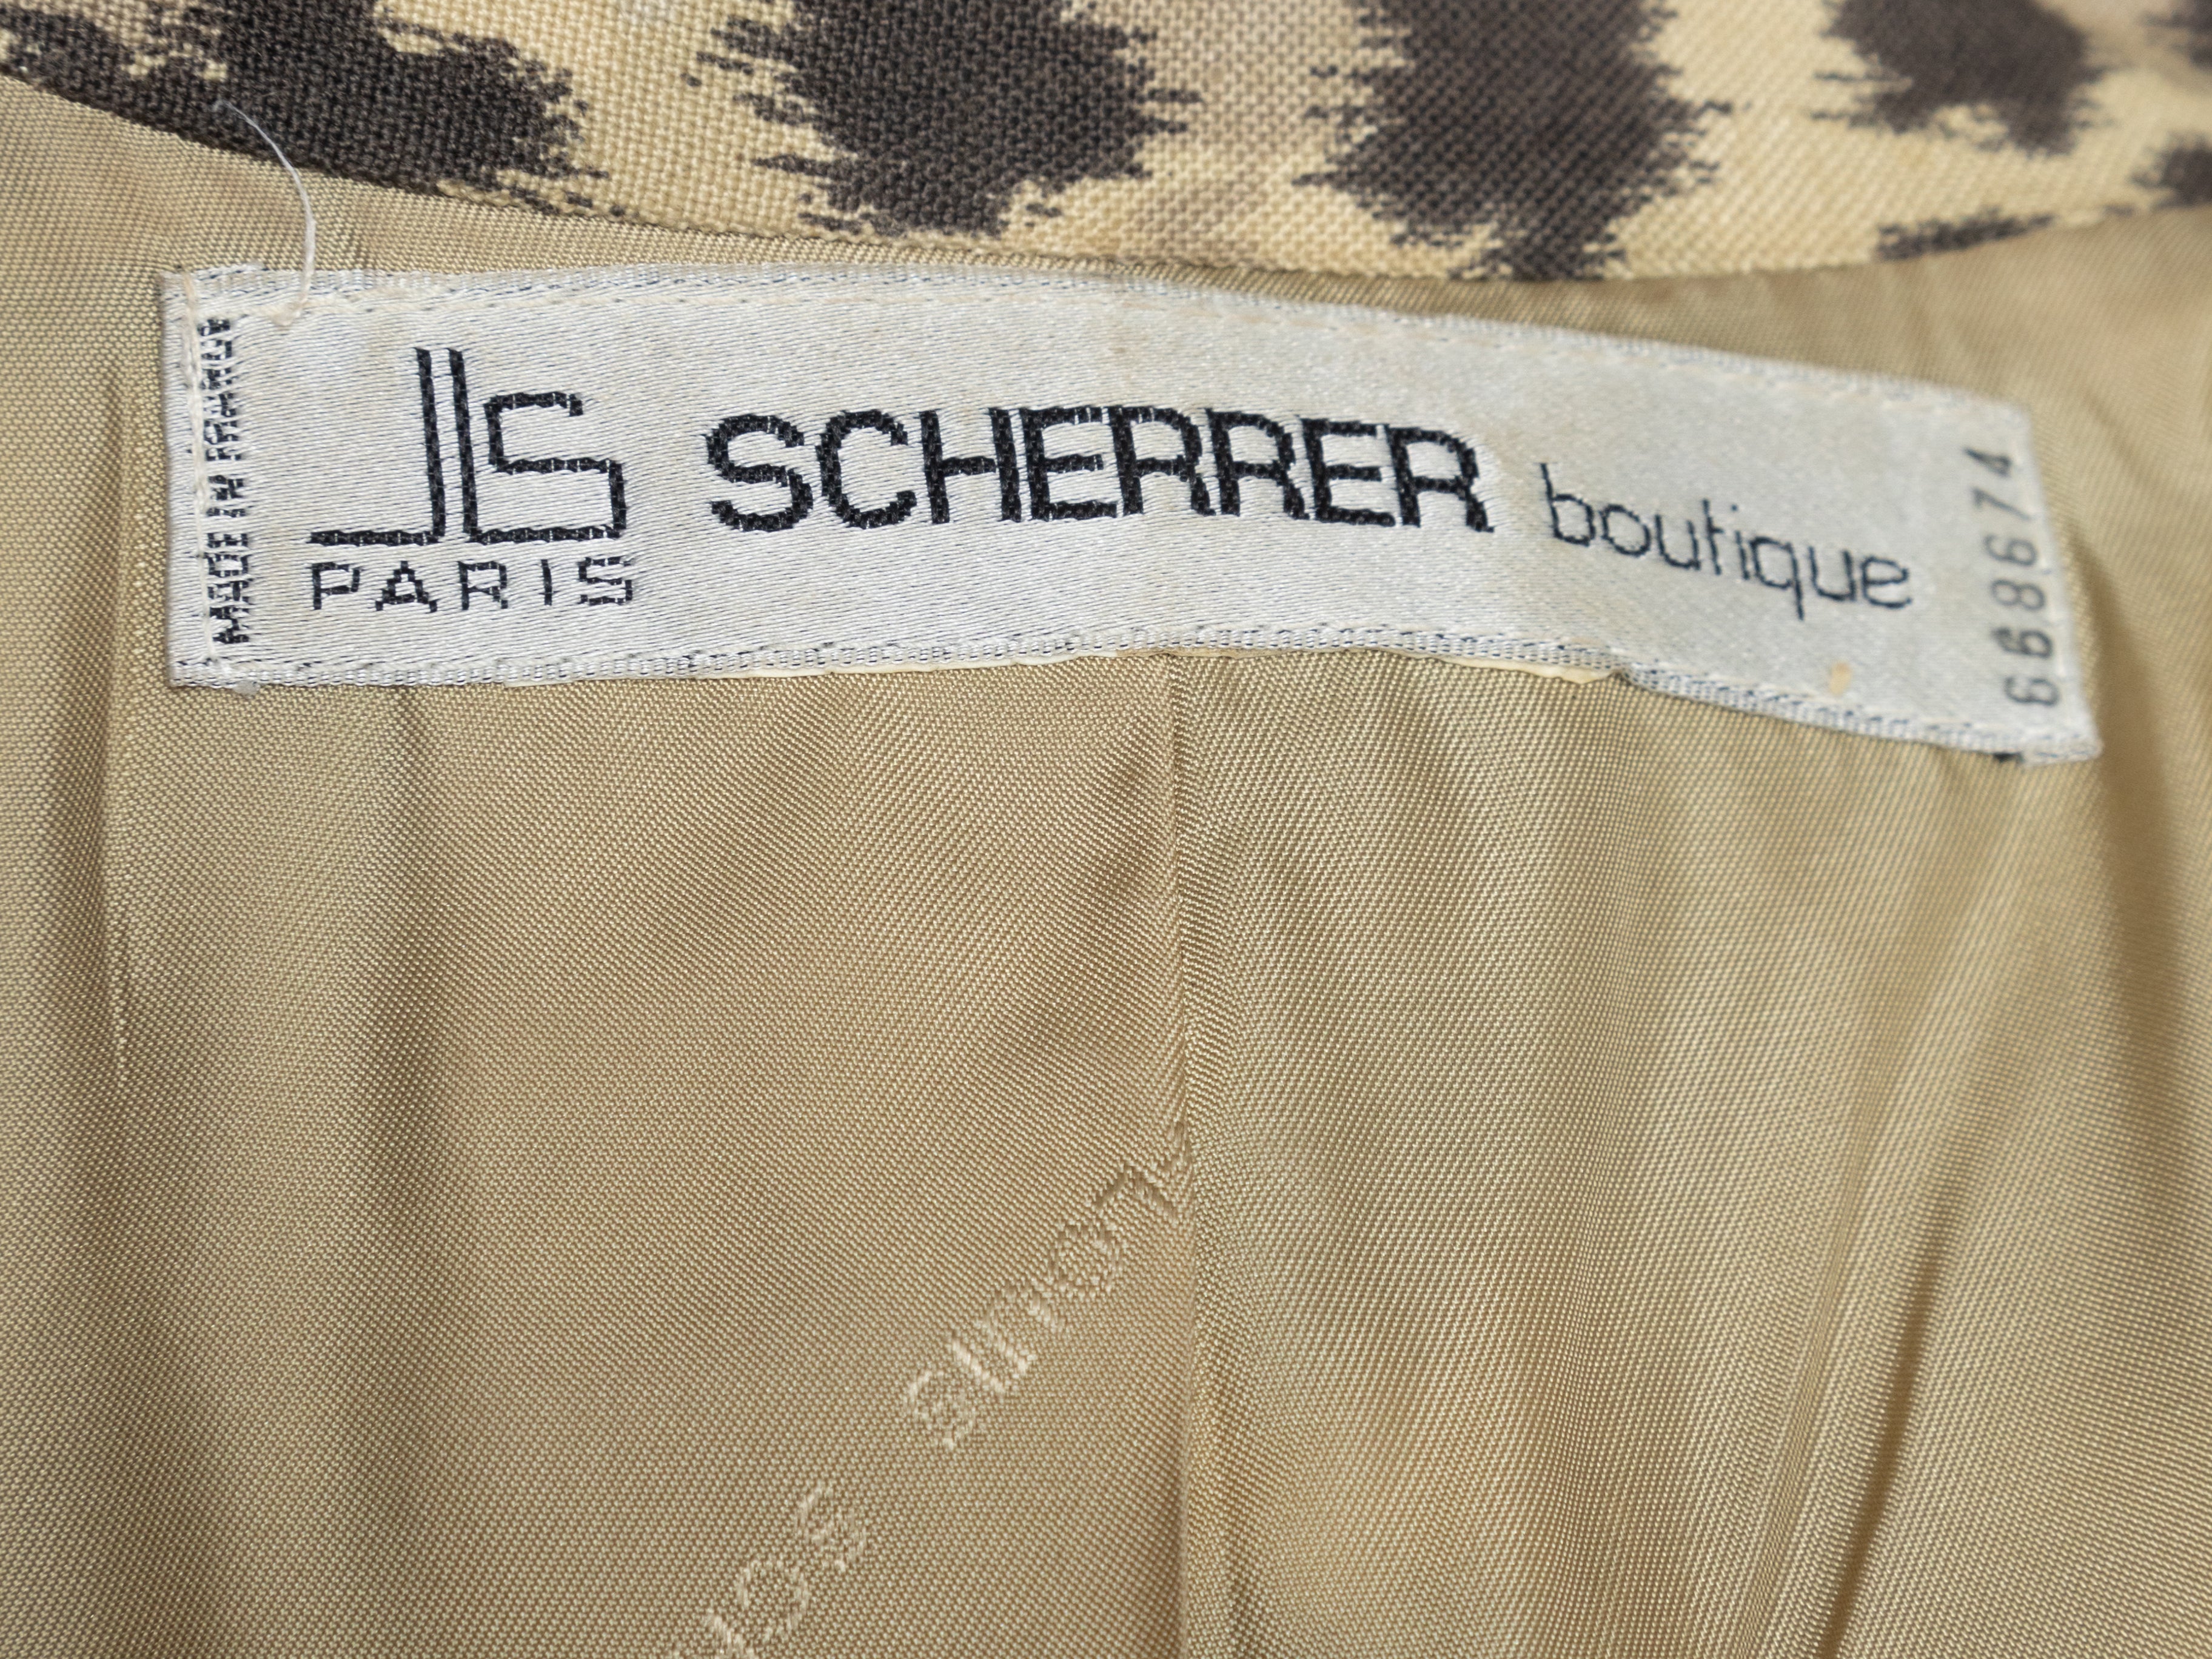 Vintage Tan & Black Jean Louis Scherrer Leopard Print Skirt Suit